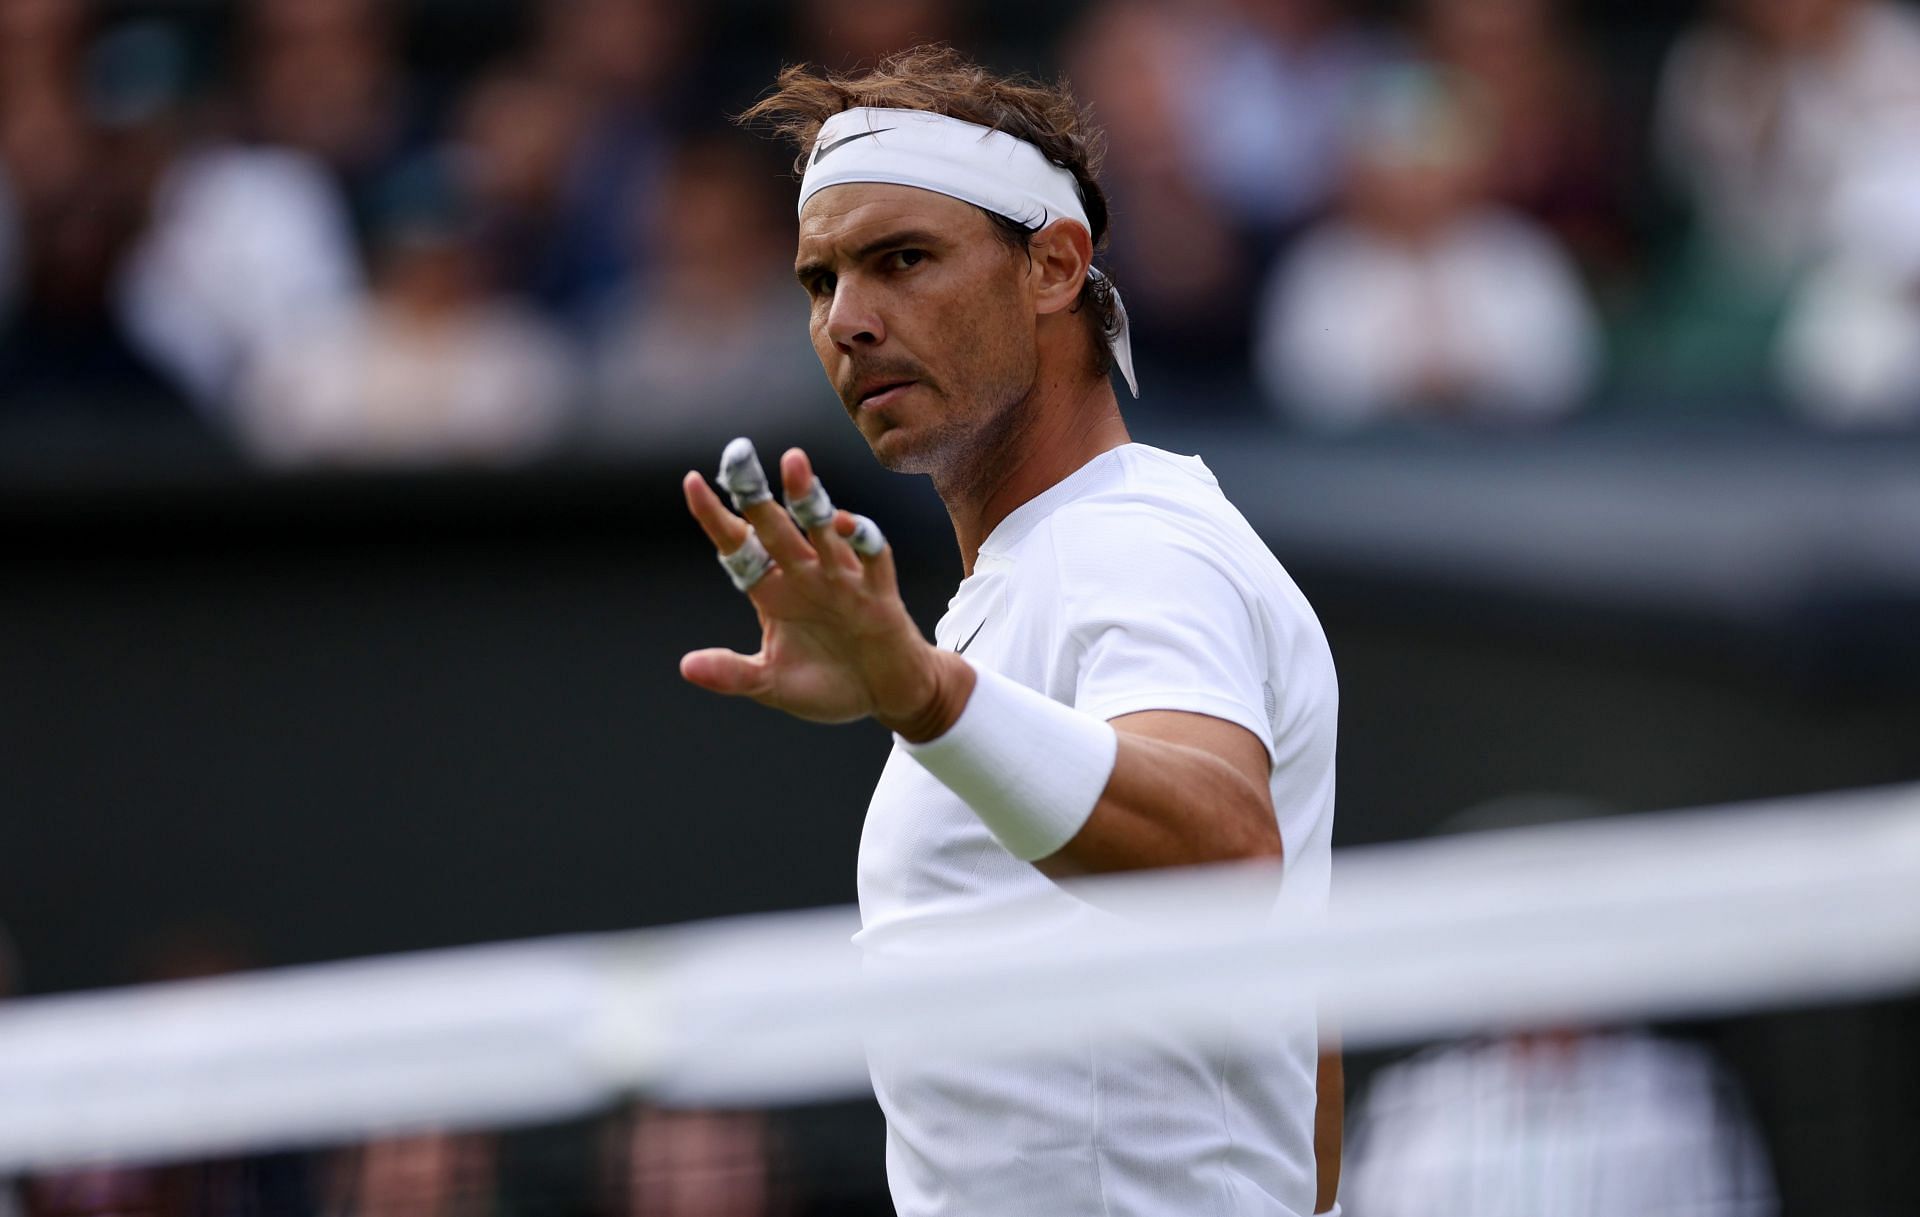 Rafael Nadal is in line to meet Novak Djokovic in the final at Wimbledon